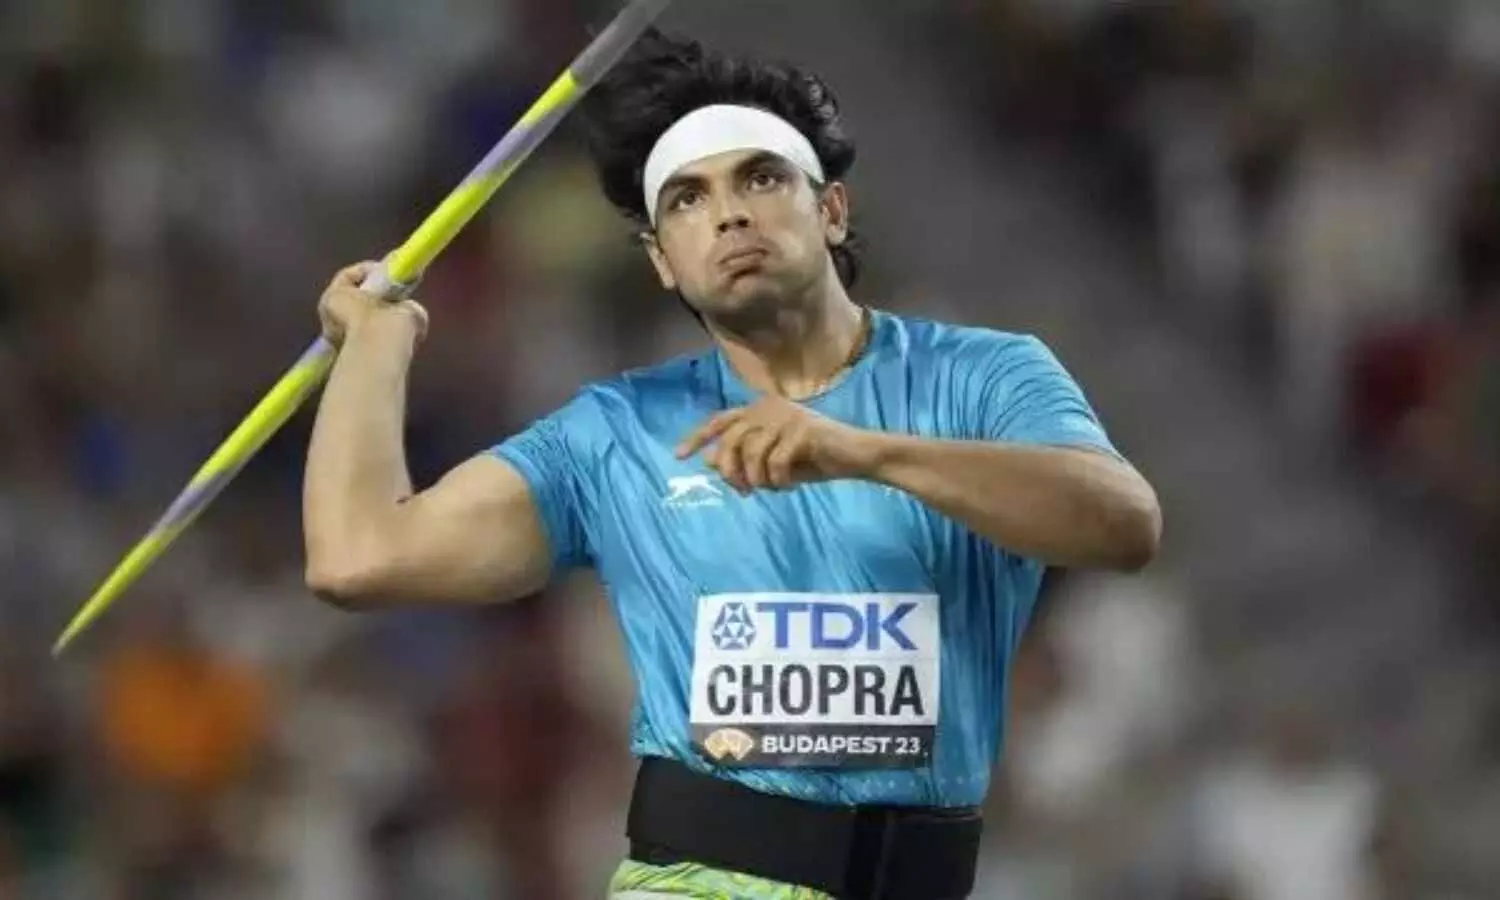 Paris Olympics 2024: Neeraj Chopra wins gold at Paavo Nurmi Games